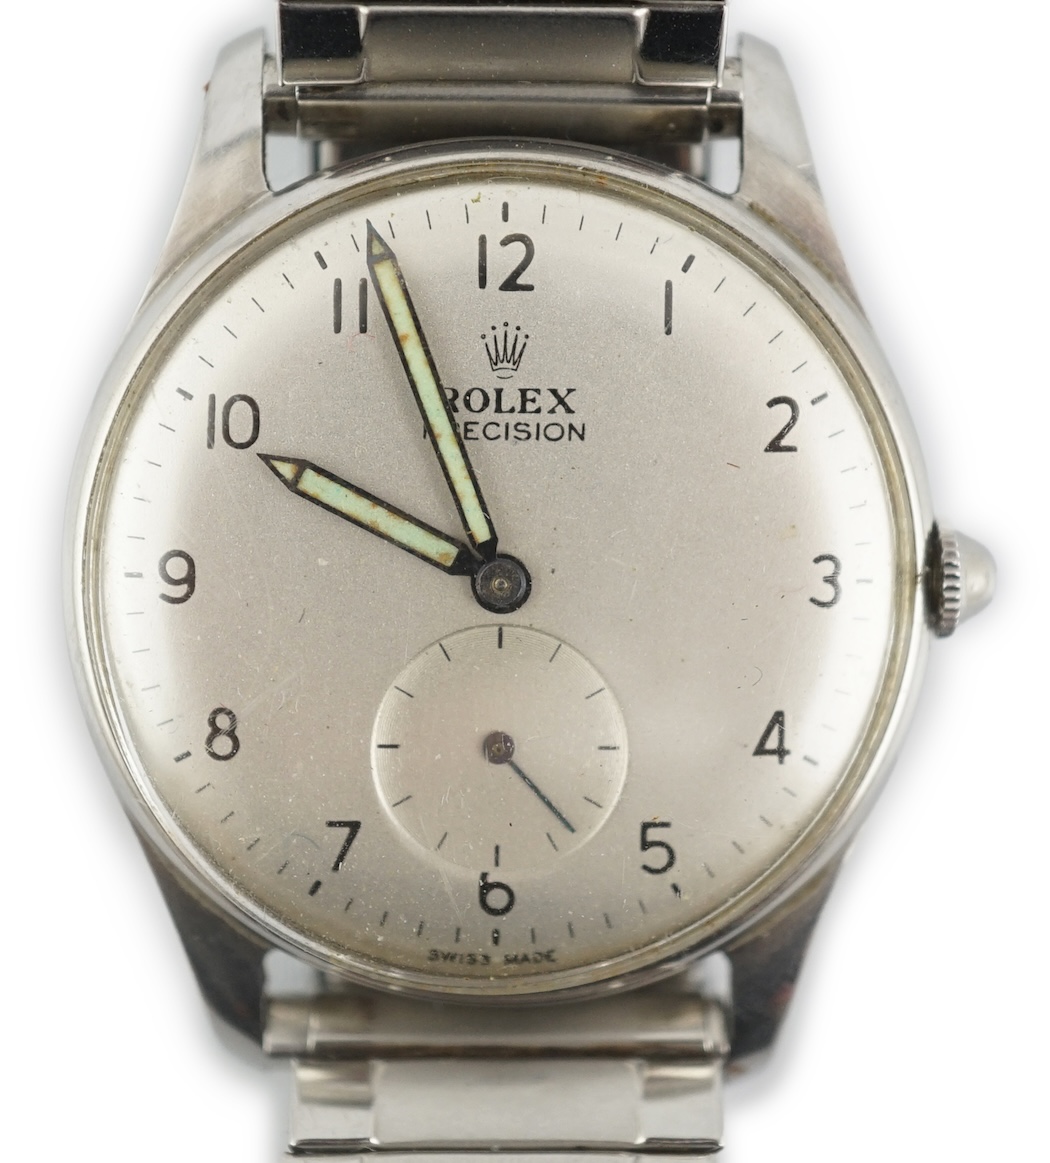 A gentleman's 1950's stainless steel Rolex Precision manual wind wrist watch